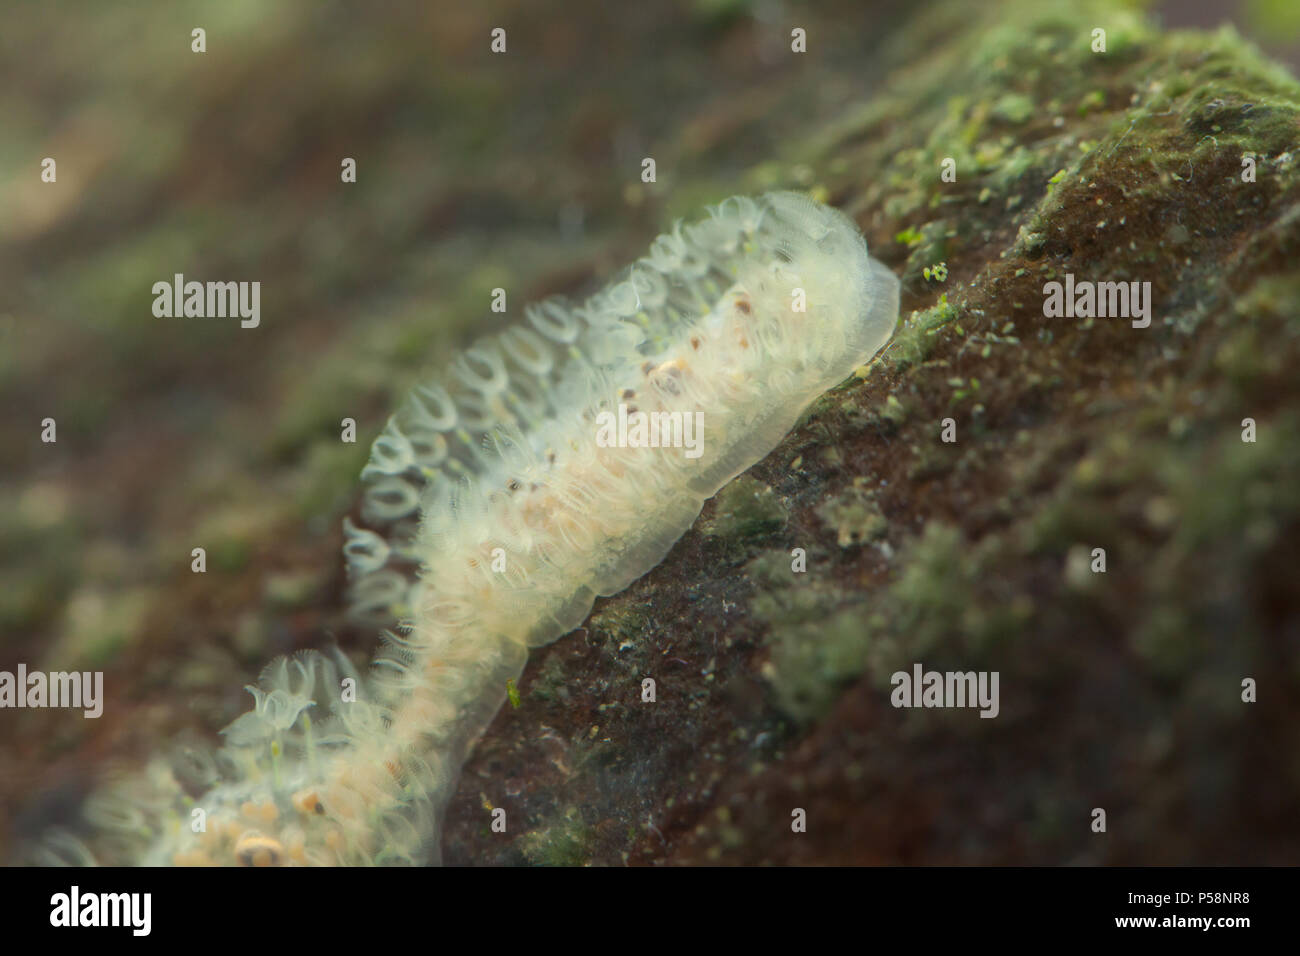 Freshwater moss animal (dividing) Stock Photo